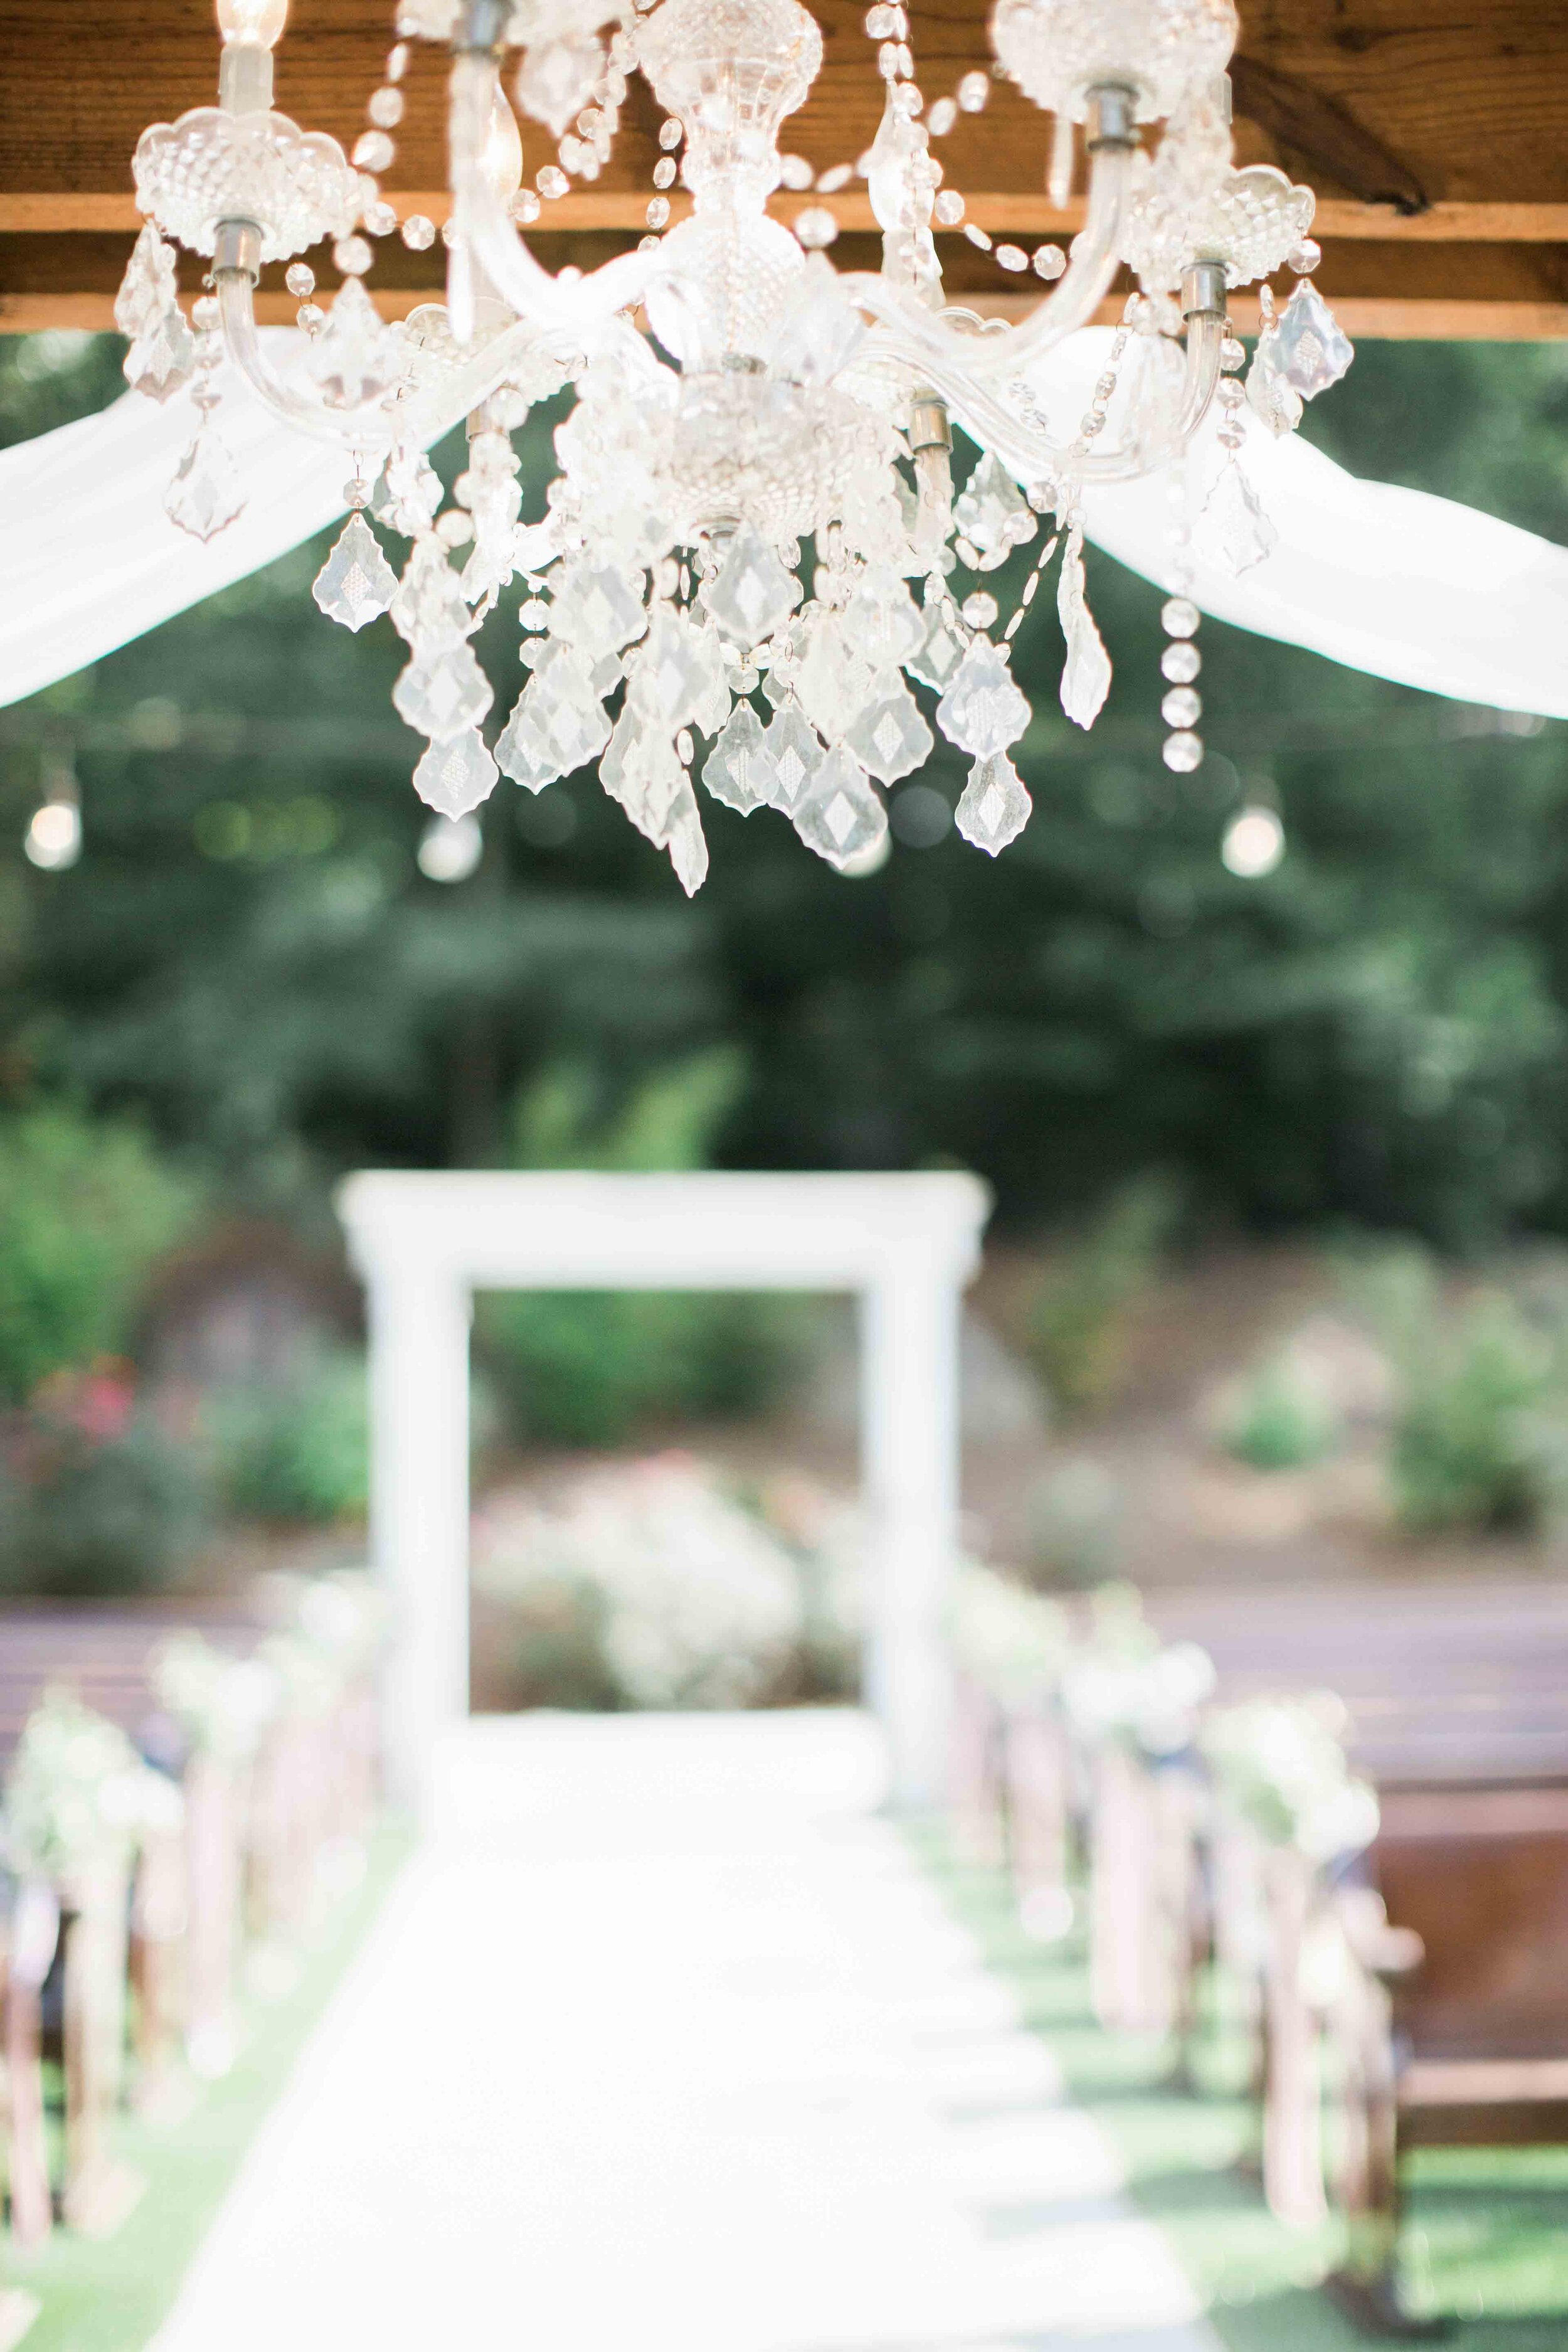 Gorgeous chandelier wedding aisle